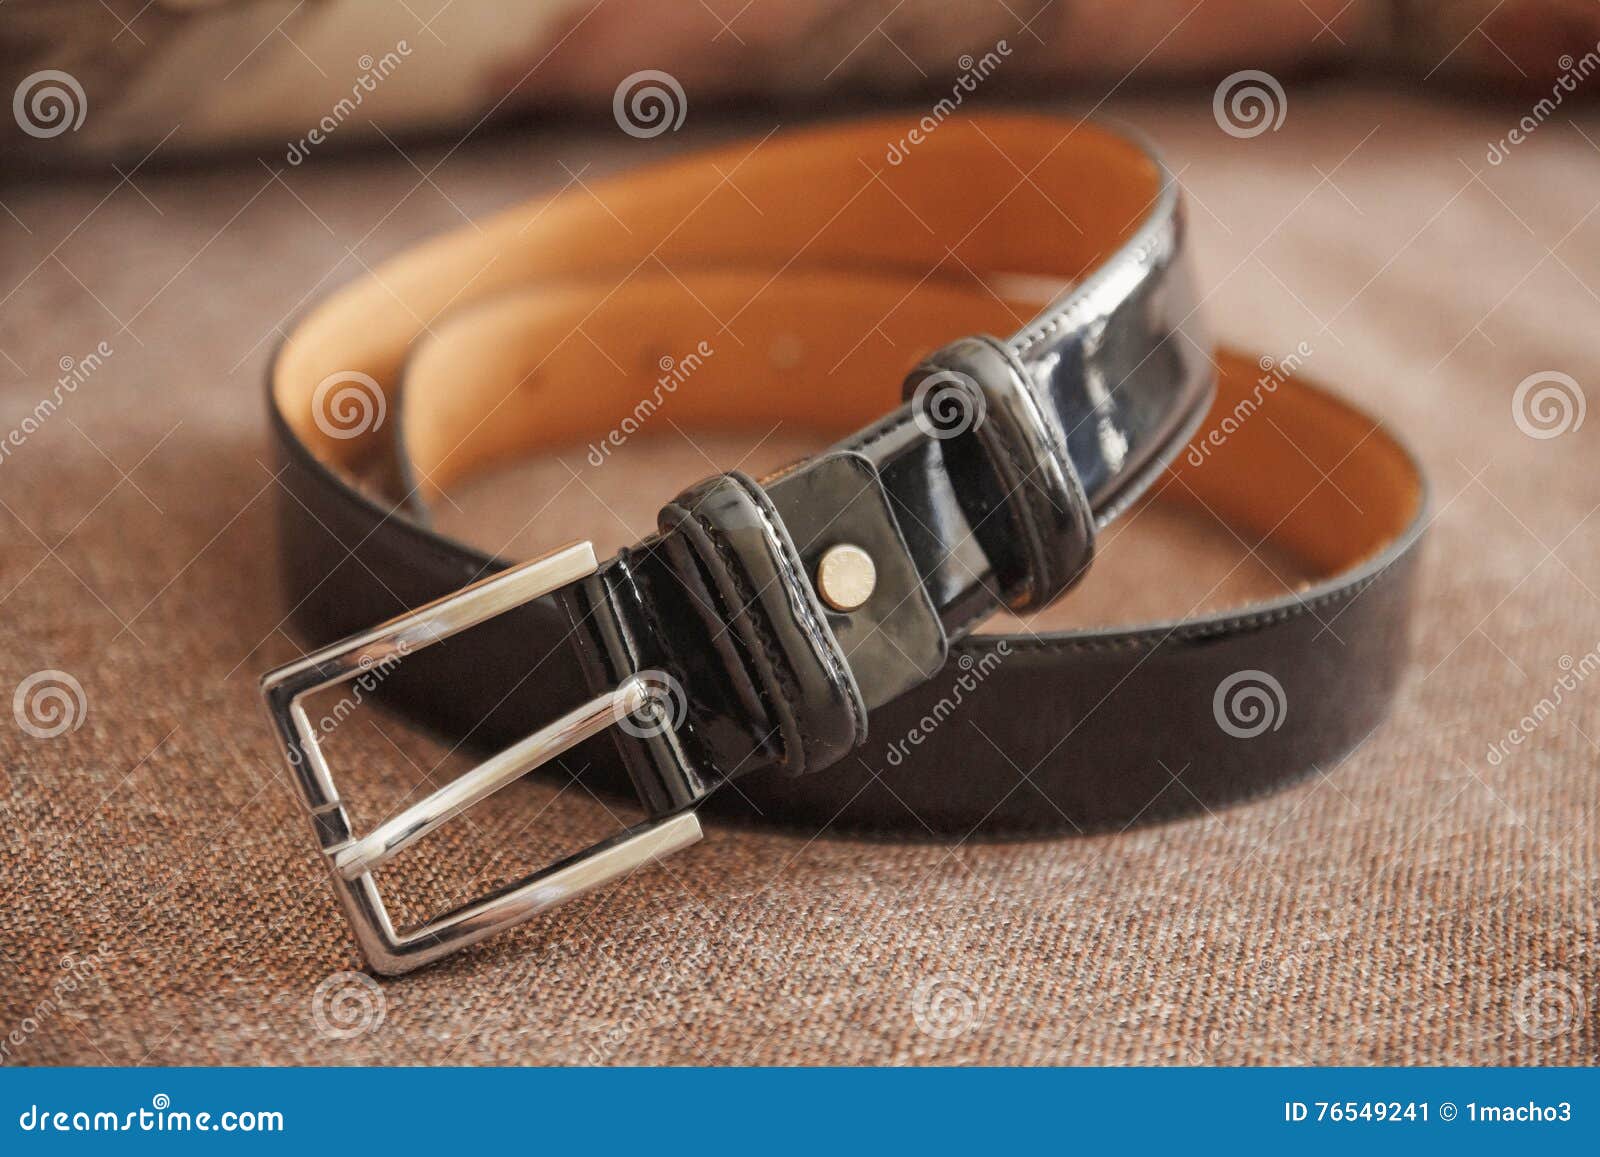 Wedding Men S Belt Lying on the Floor Stock Image - Image of ...